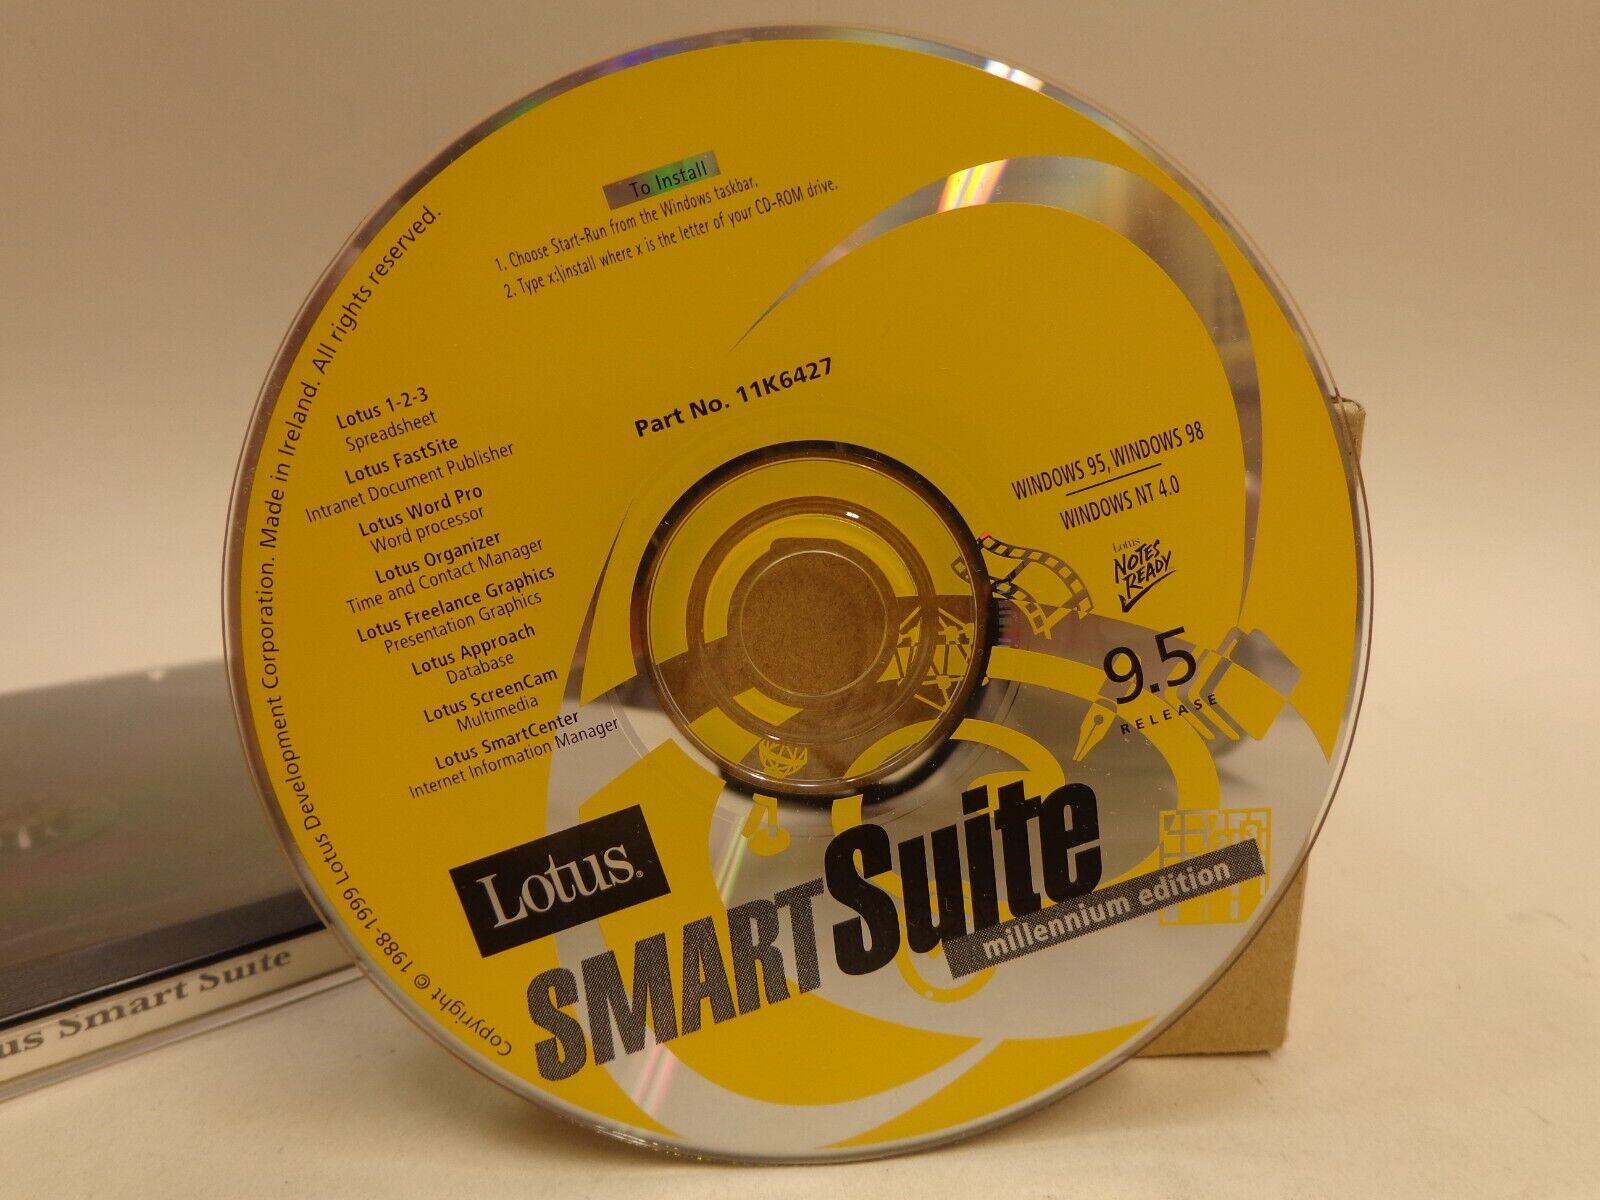 Lotus Smart Suite -CD  Ver 9.5 Win 95/98/NT 4